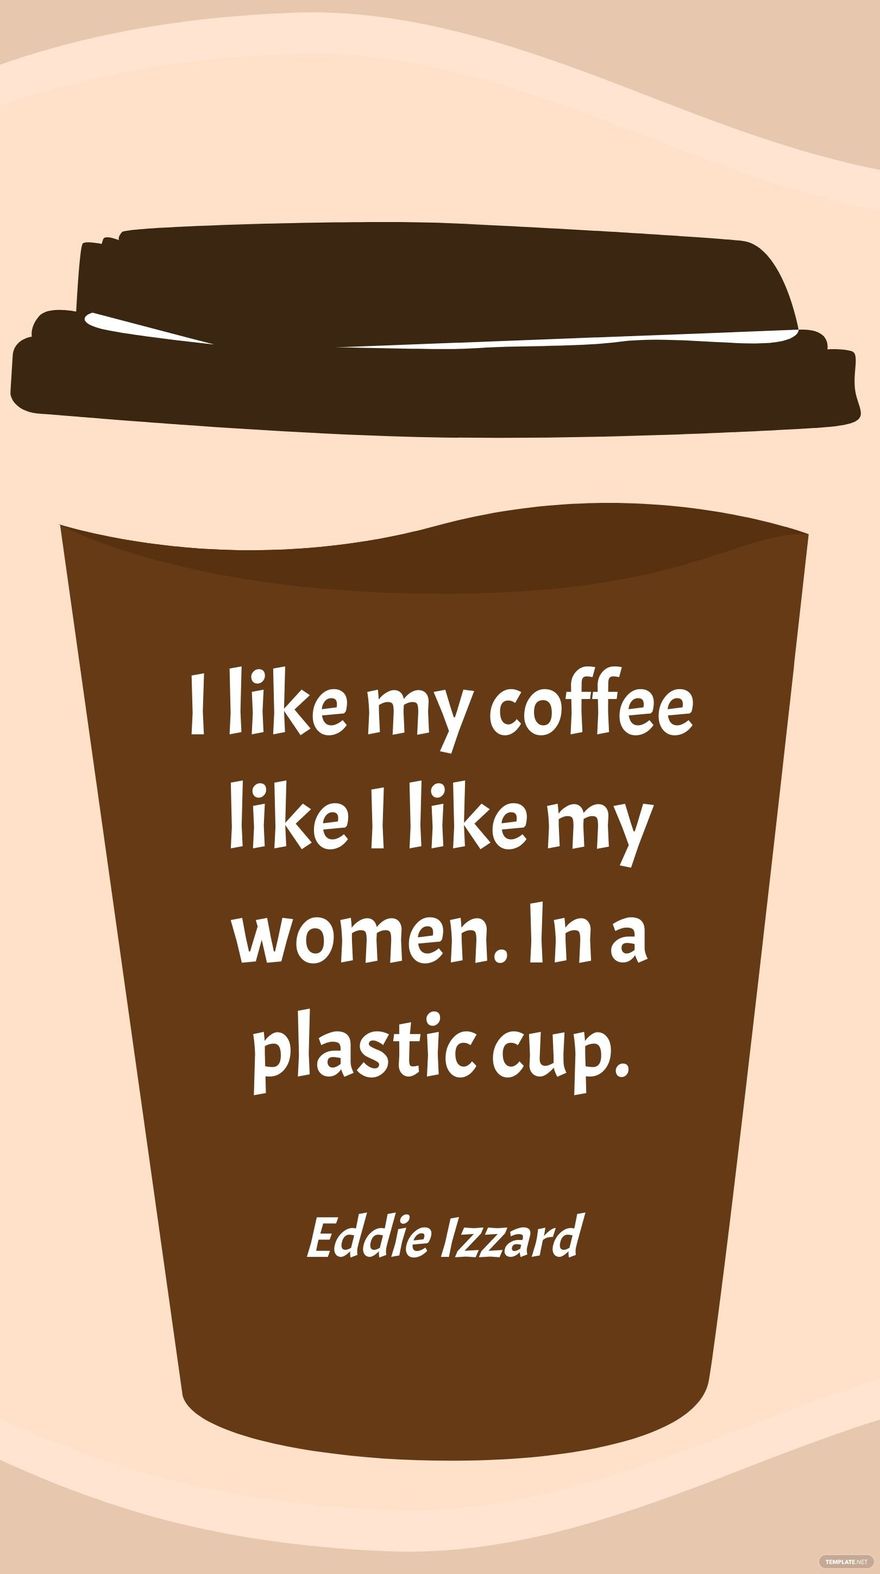 Eddie Izzard - I like my coffee like I like my women. In a plastic cup.